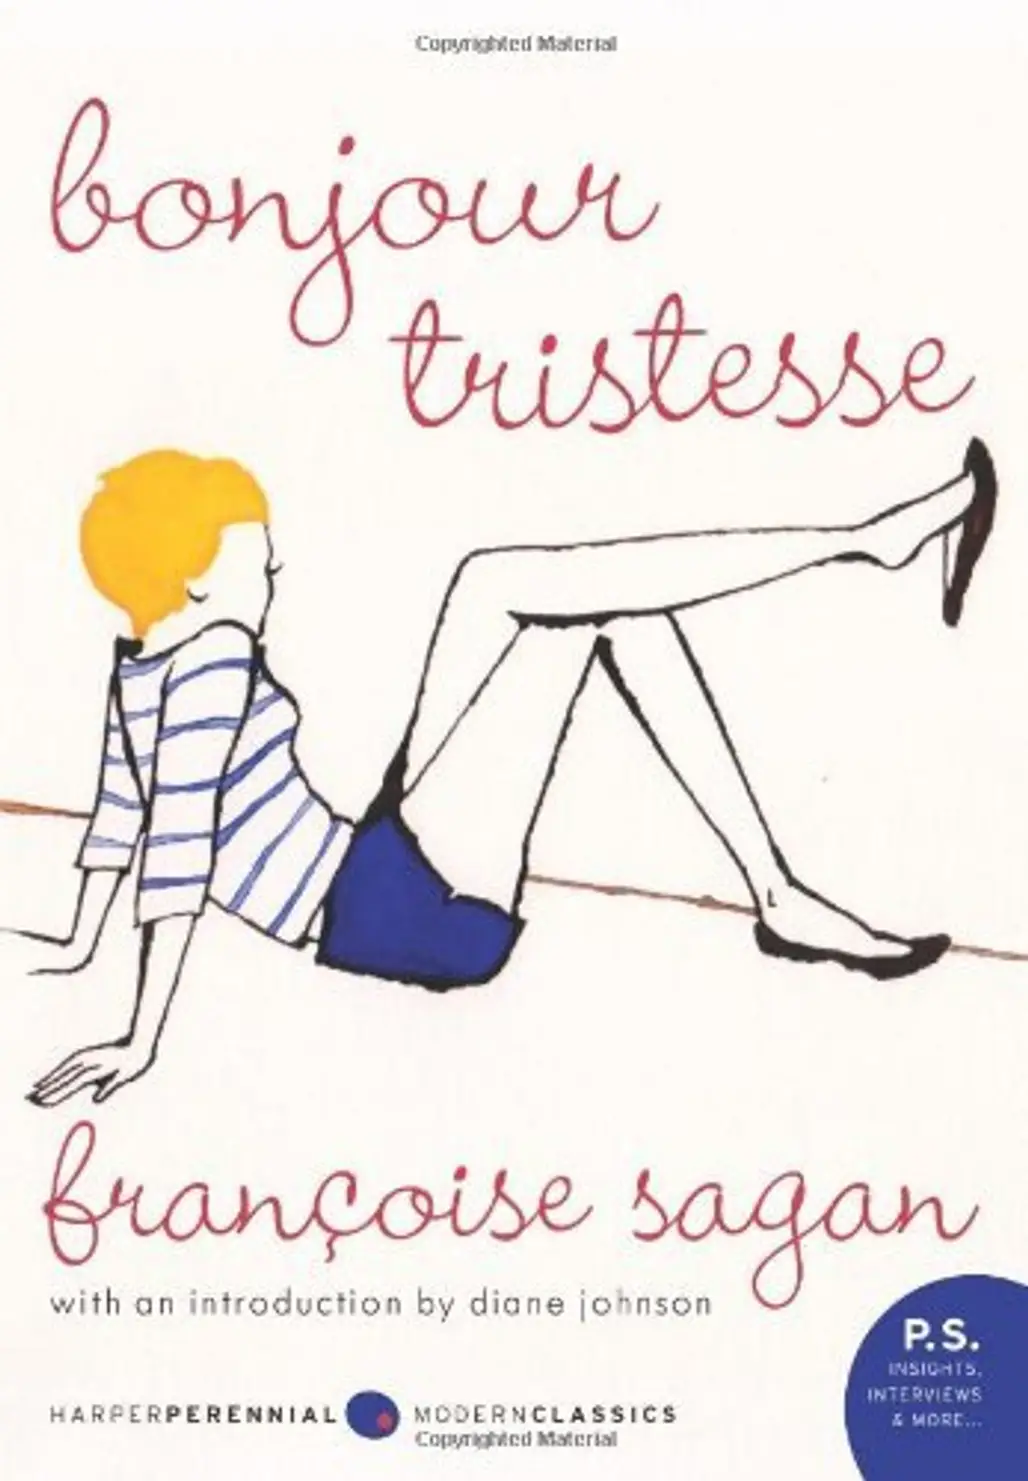 Bonjour Tristesse – Françoise Sagan